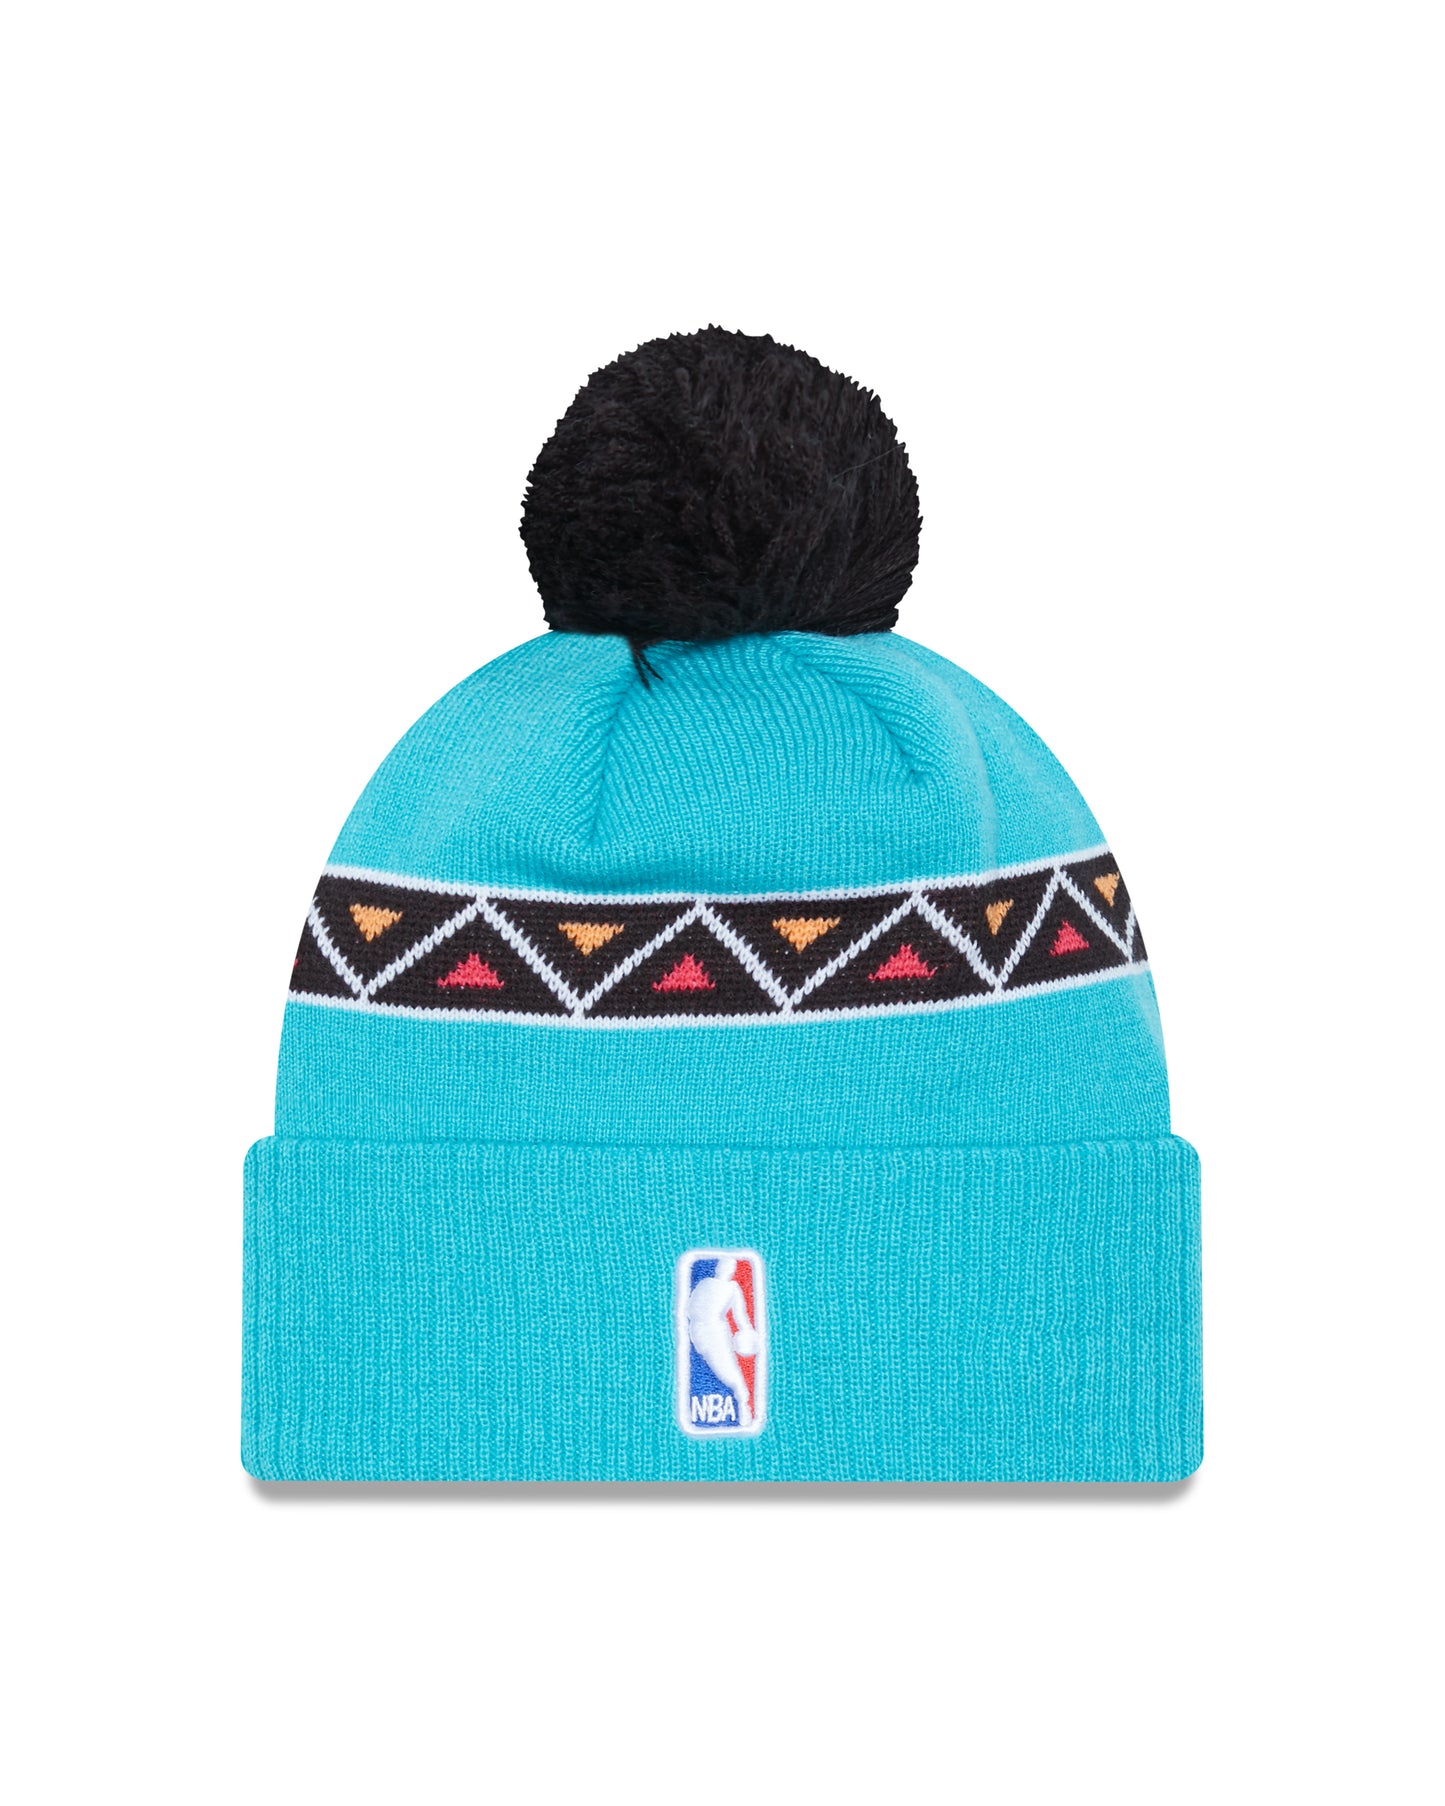 San Antonio Spurs New Era City Edition Knit Hat